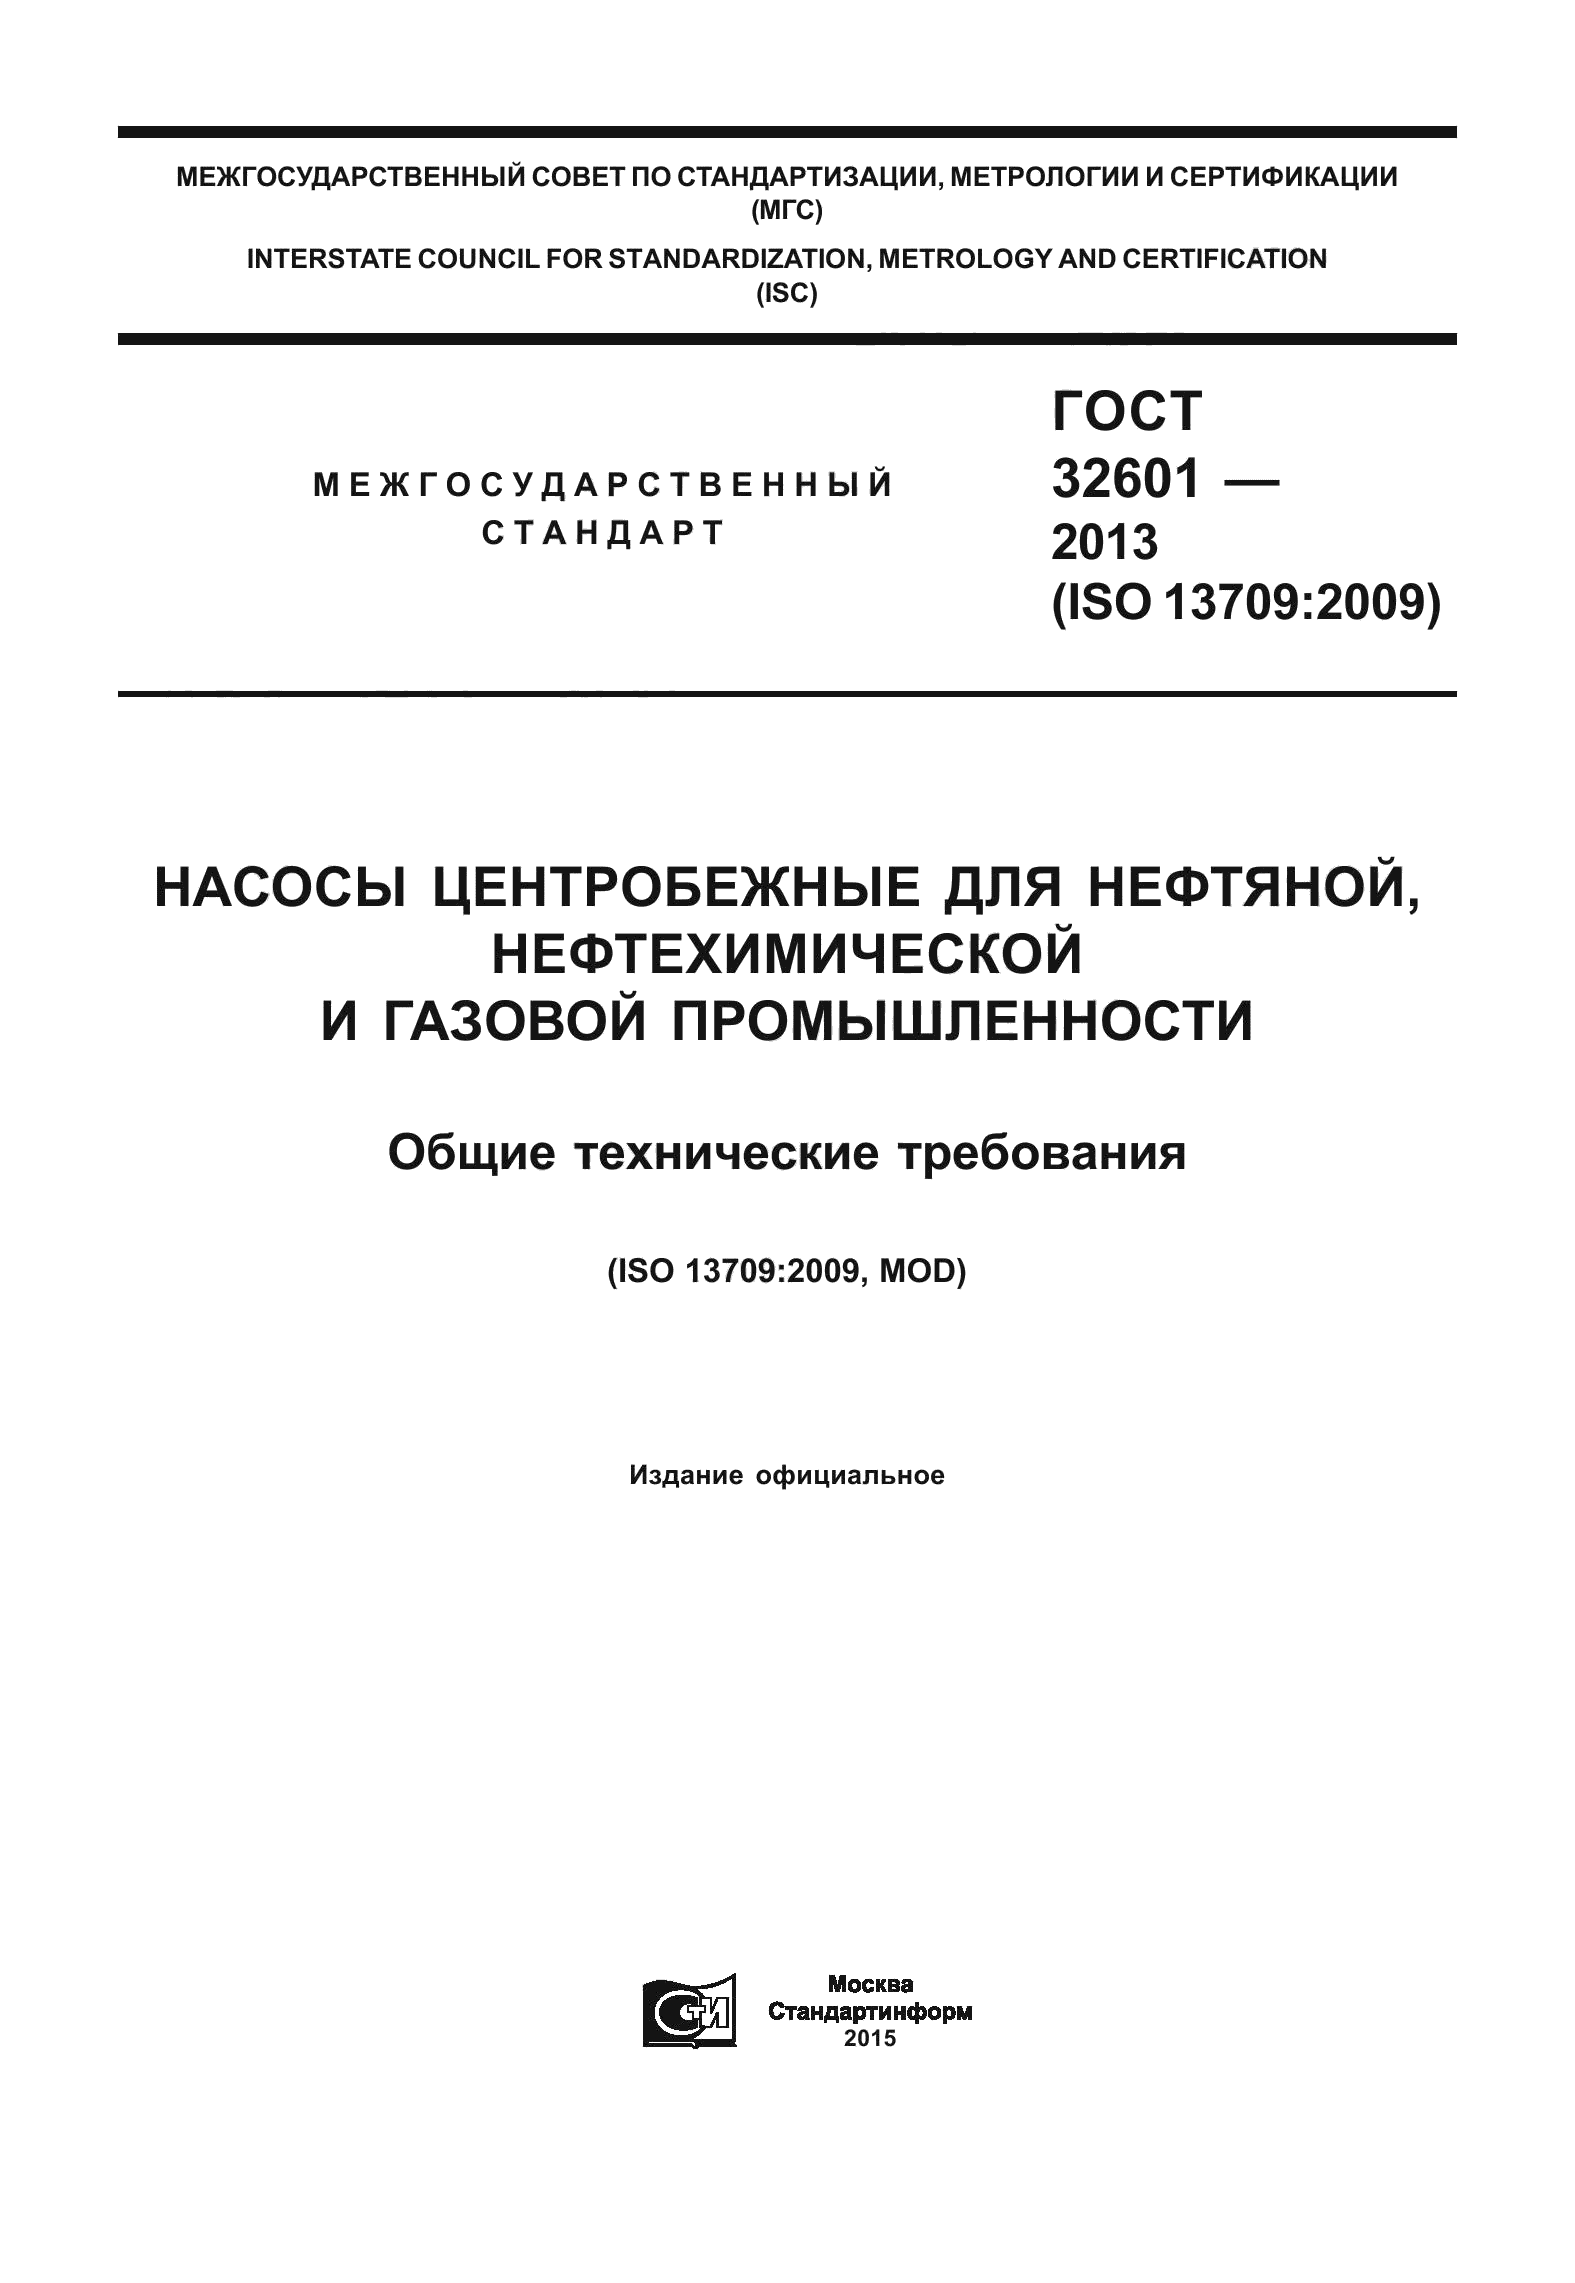 ГОСТ 32601-2013